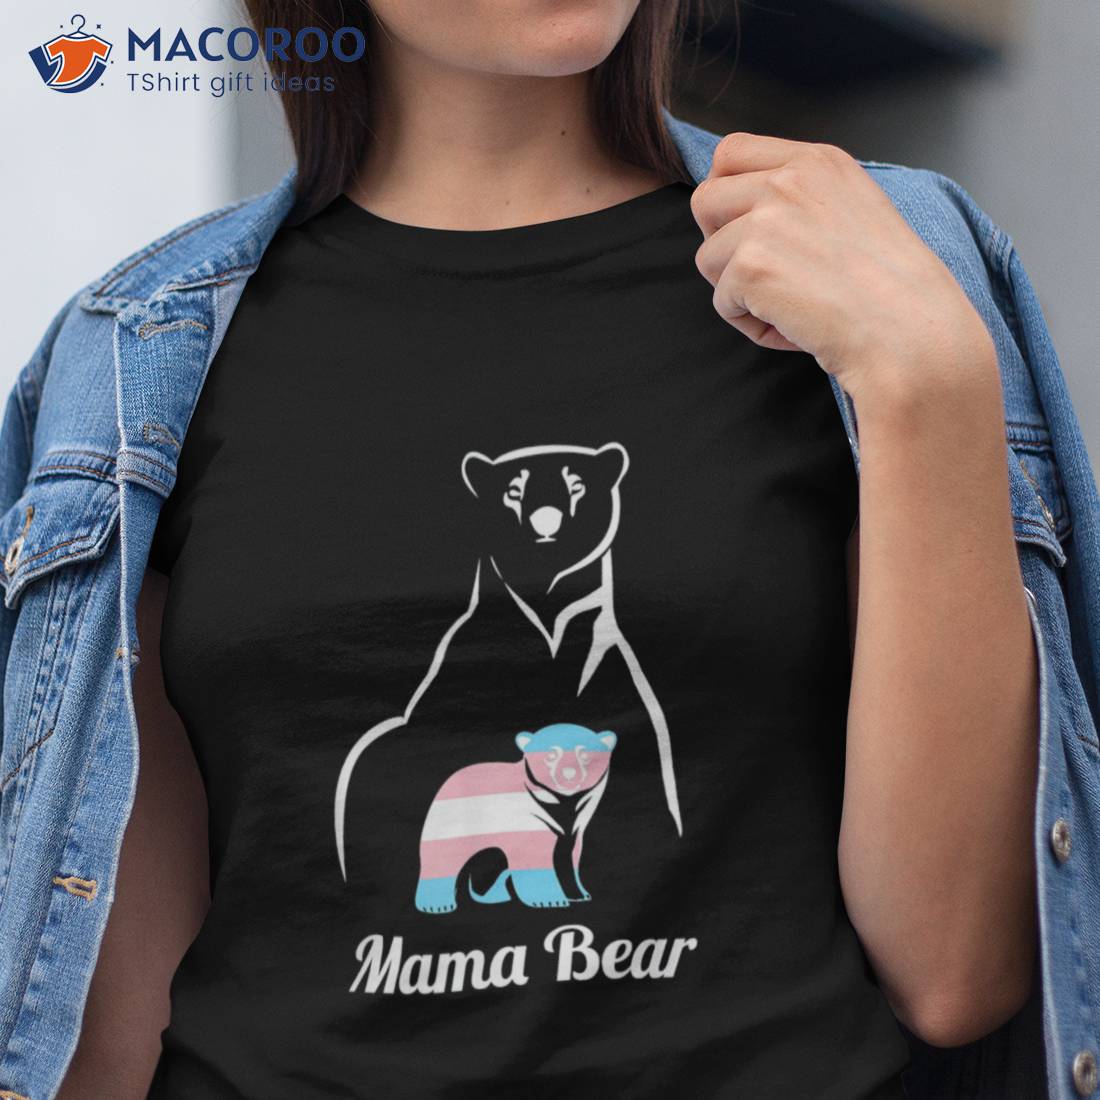 Mama Bear Is Such a Cute Way to Describe' Women's T-Shirt